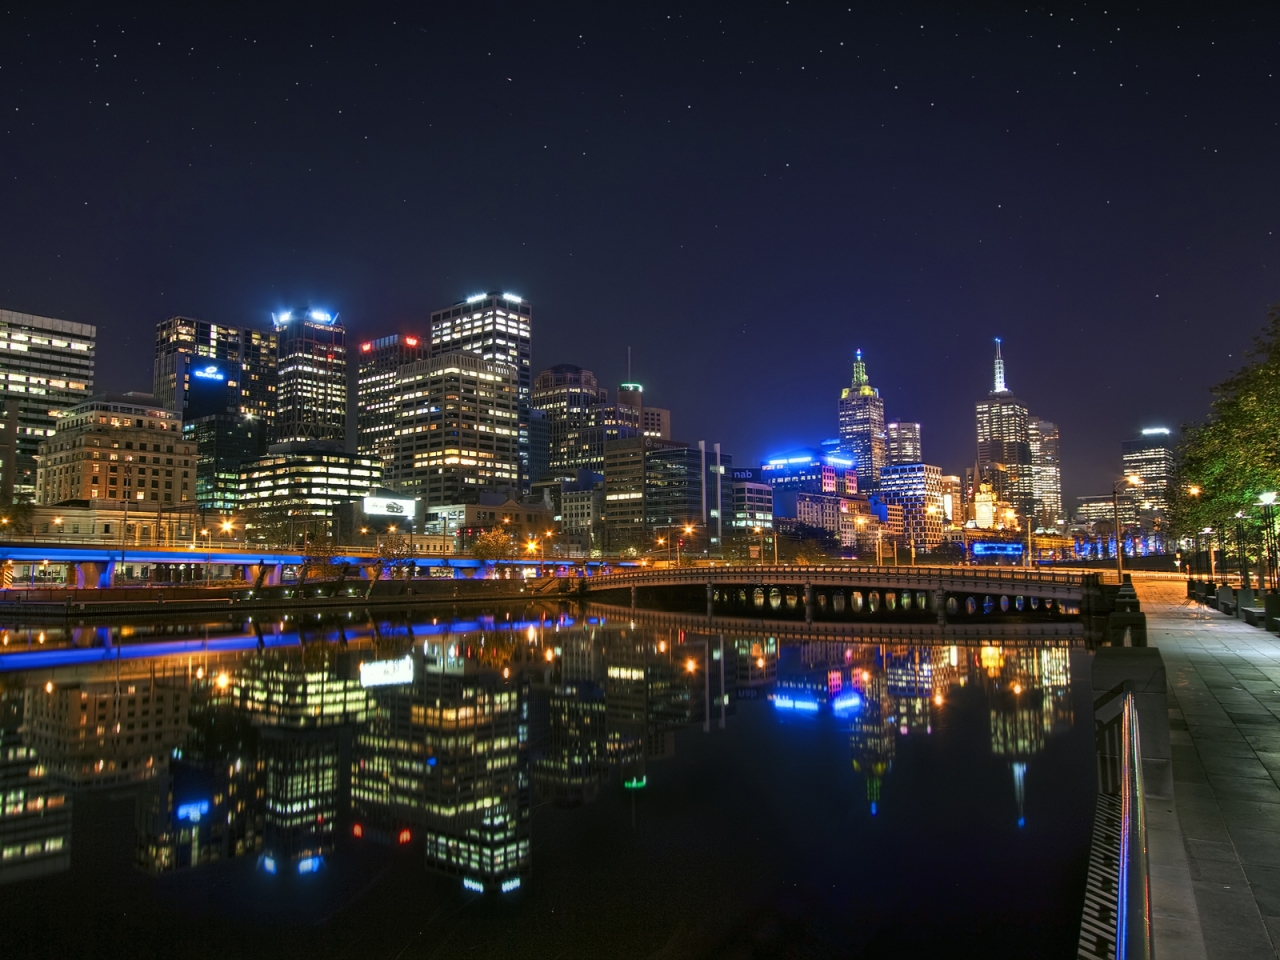 Melbourne Night Landscape for 1280 x 960 resolution